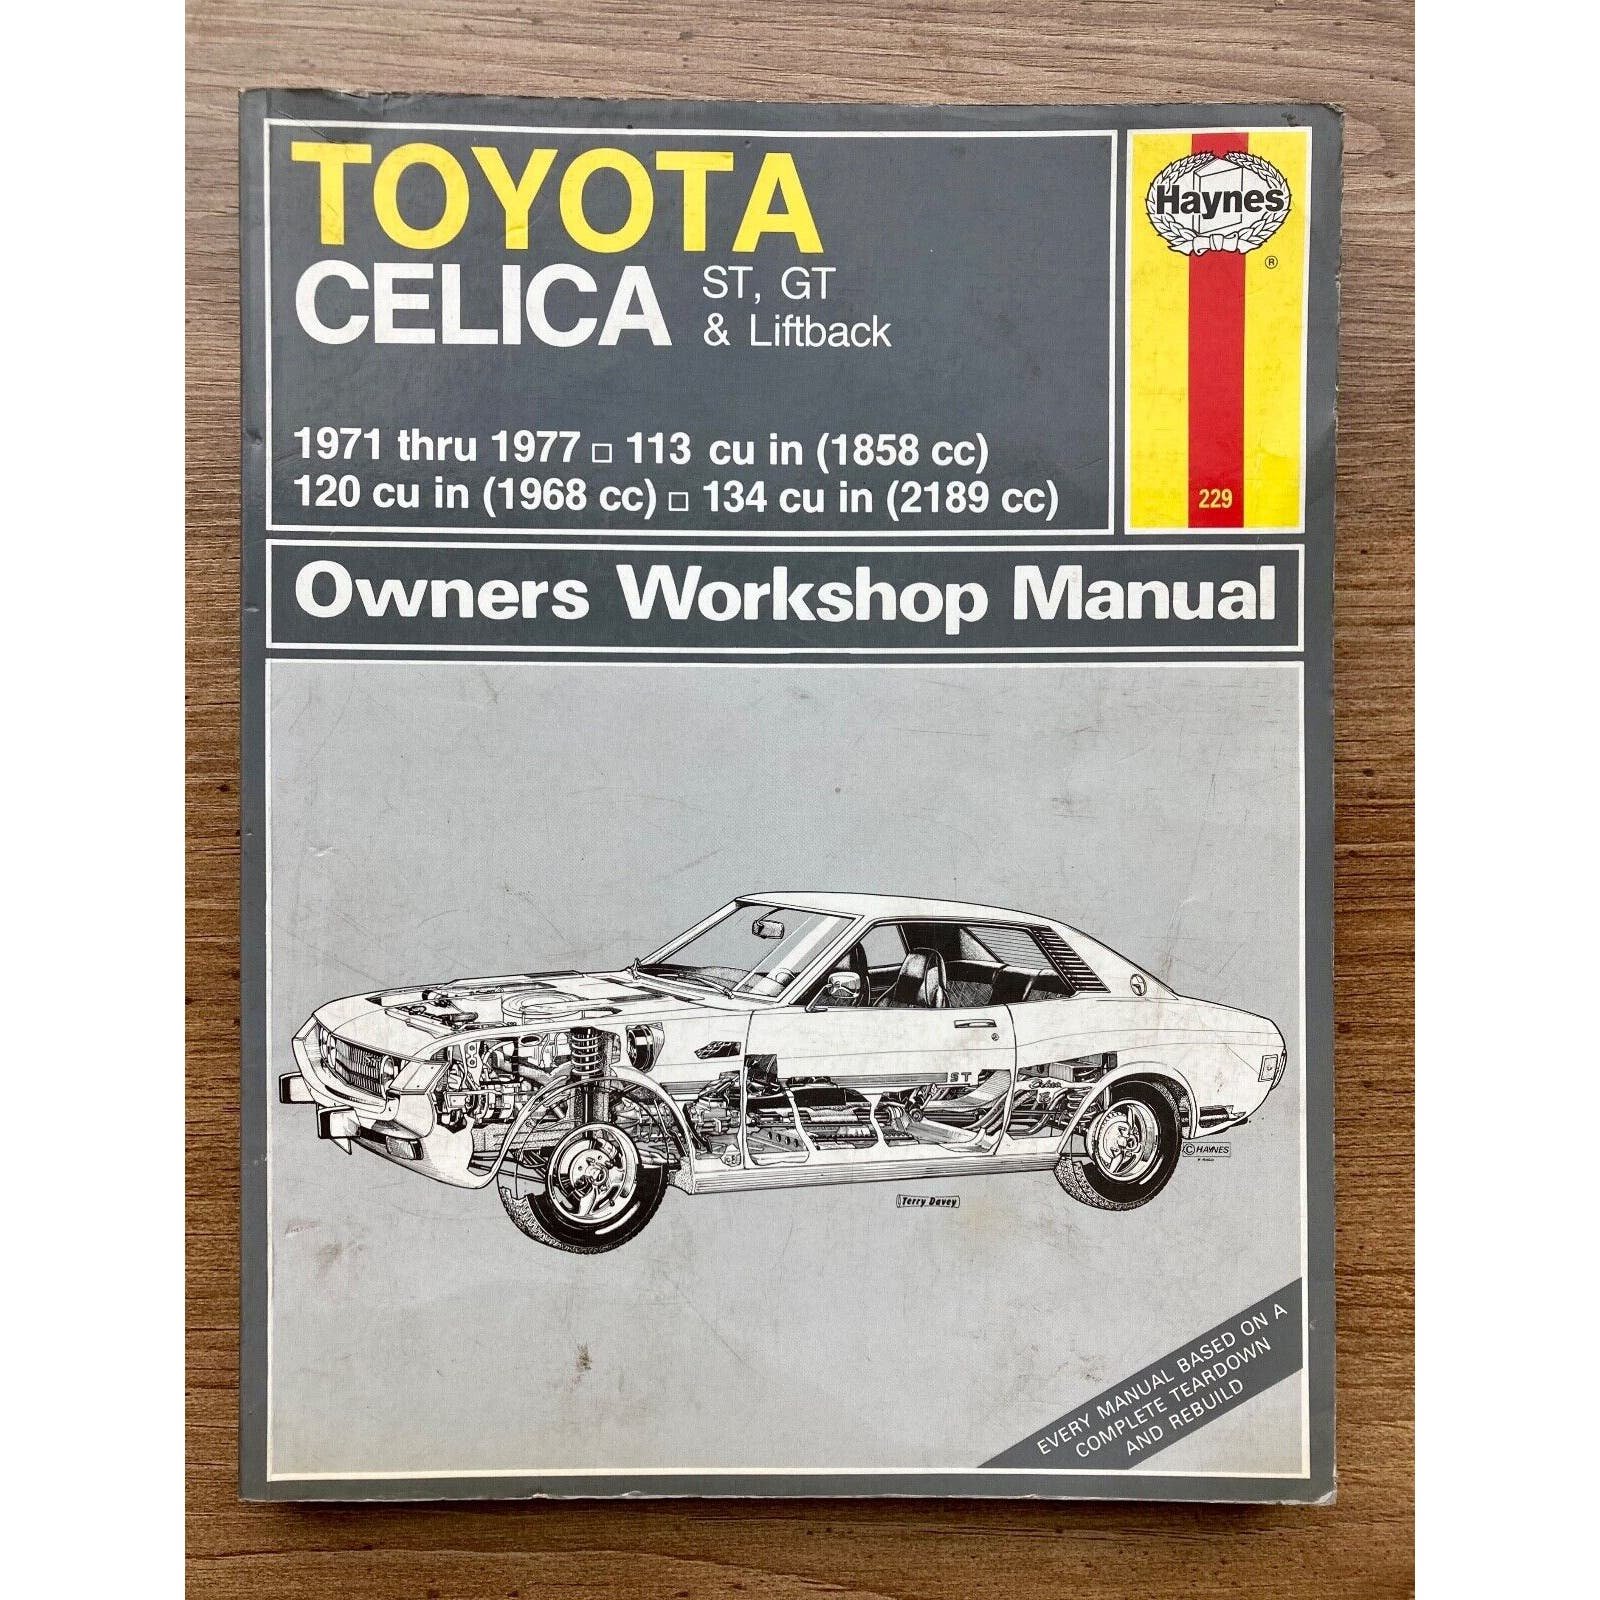 Haynes Owners Workshop Manual : TOYOTA Celica 1971-1978 RWD Models #229 hm7q7PTPD